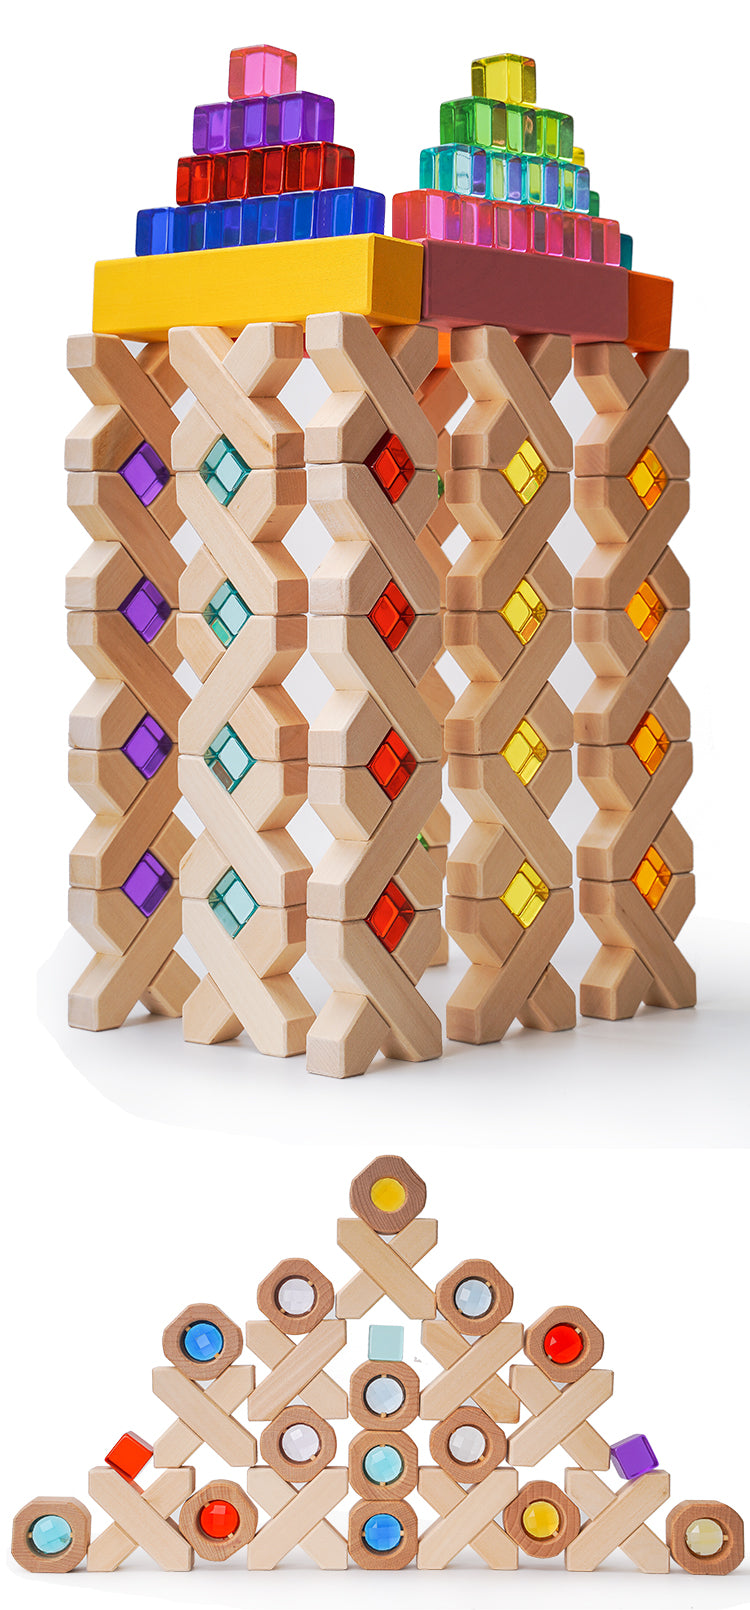 60 Pcs Rainbow Translucent Lucite Cubes Set with Storage Tray